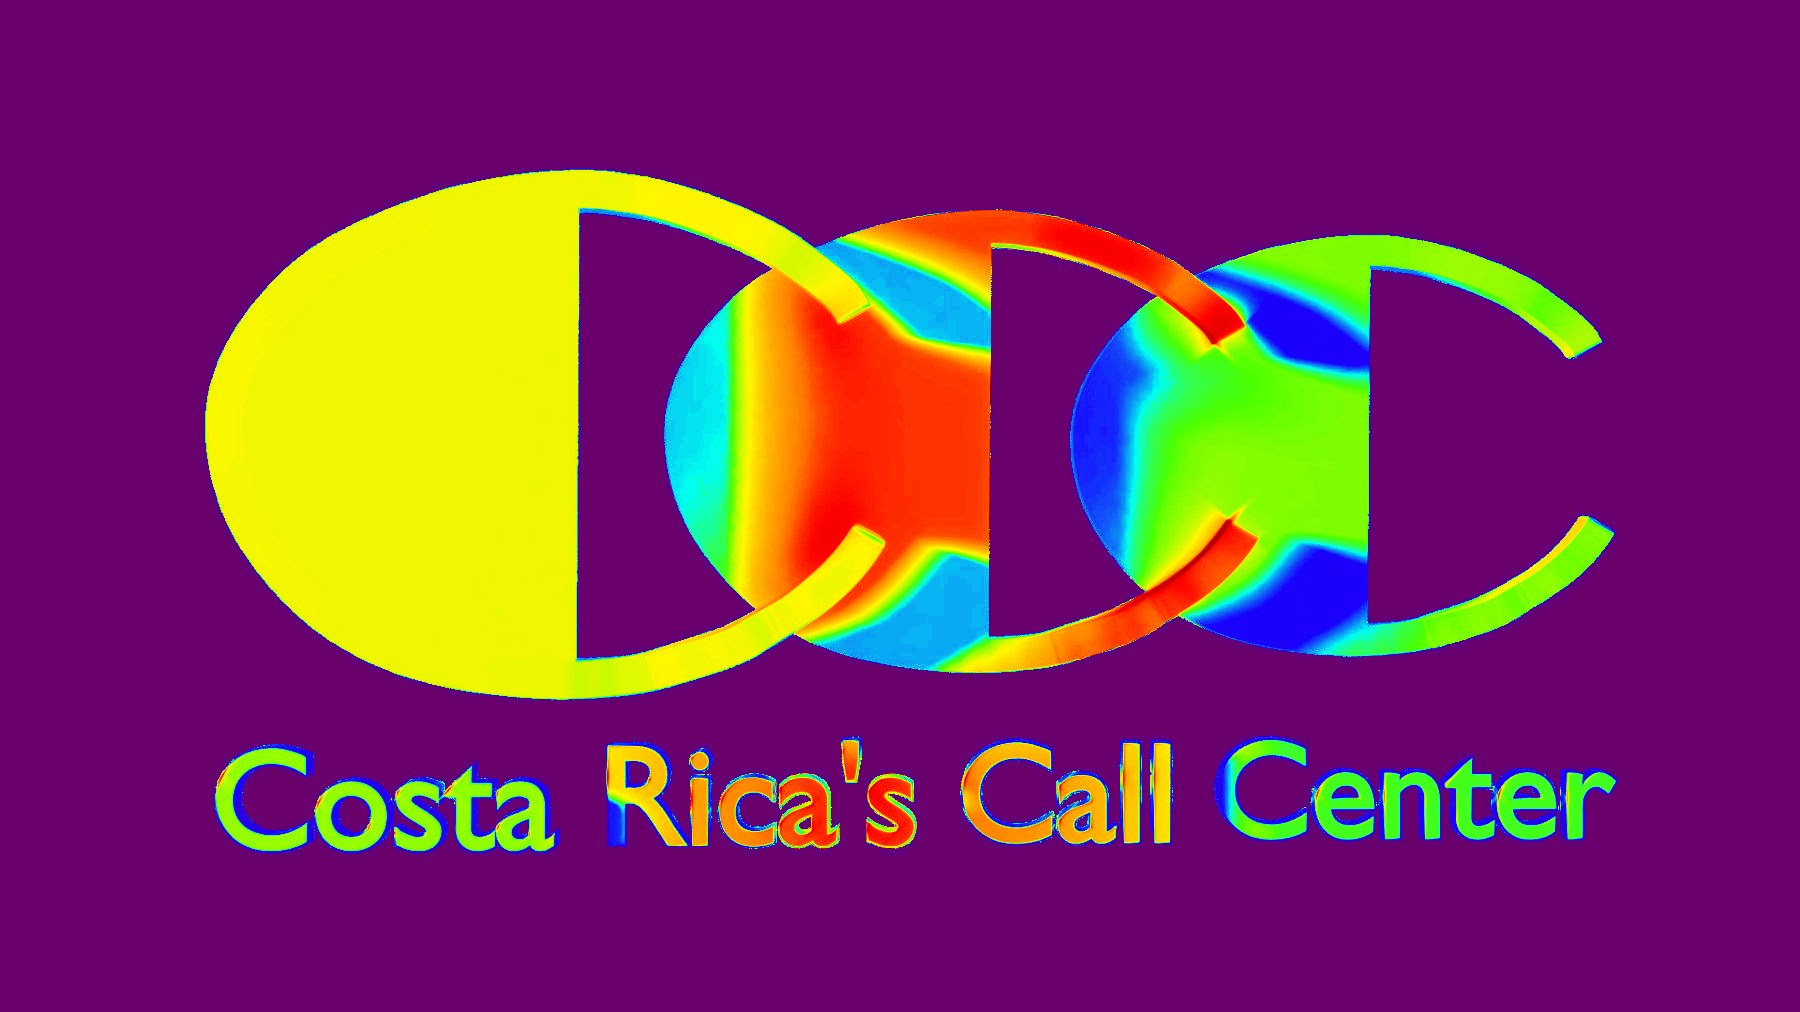 BPO LEAD JOB DESCRIPTION COSTA RICA.jpg  by richardblank